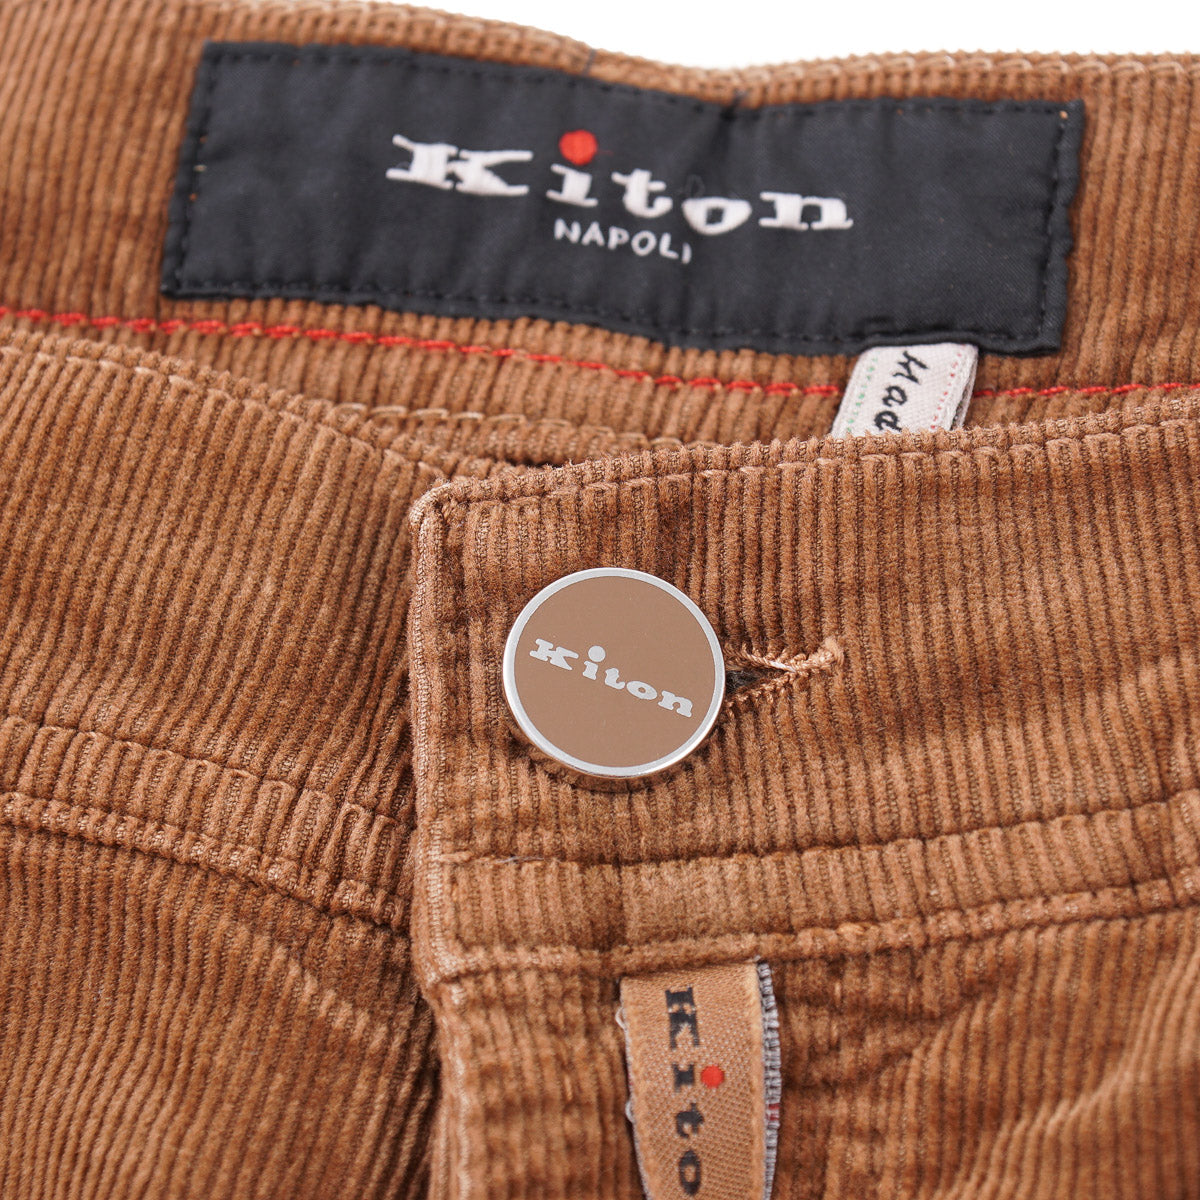 Kiton Cotton-Cashmere Corduroy Jeans - Top Shelf Apparel